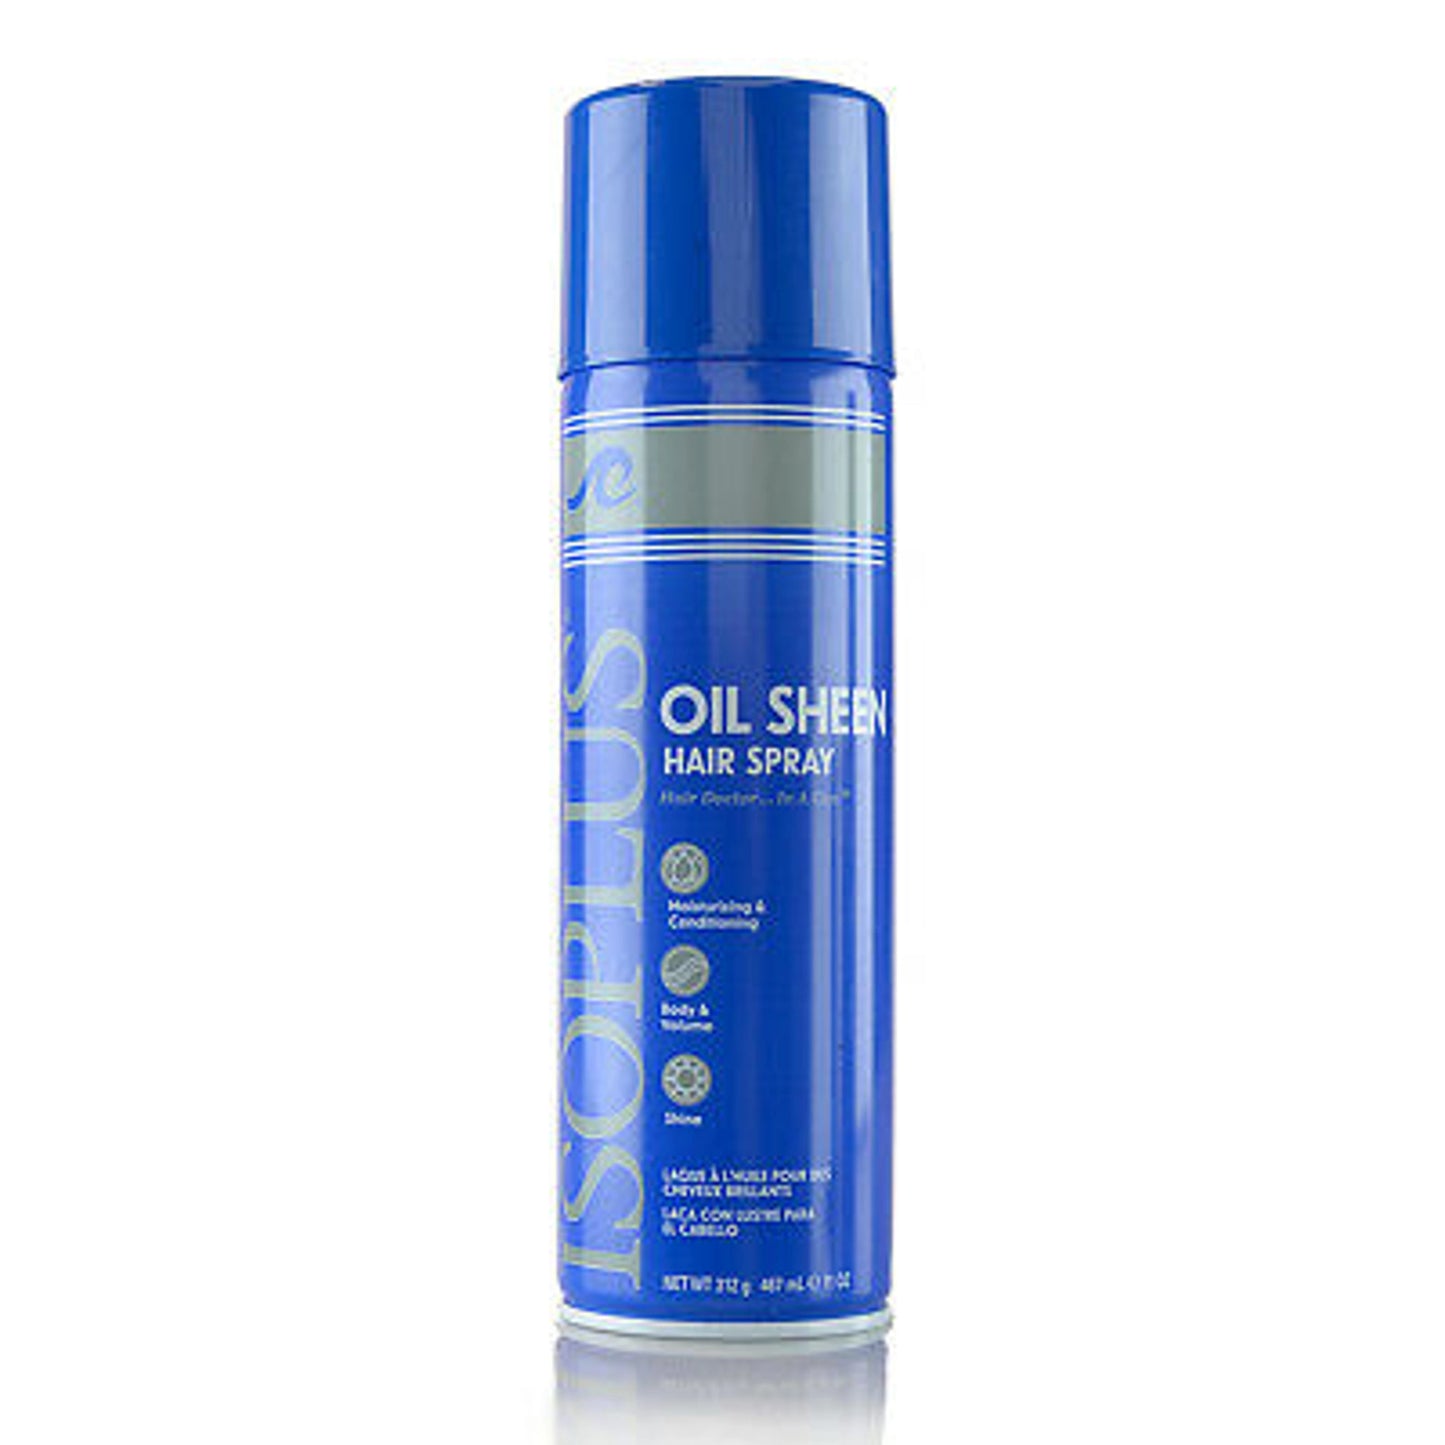 Isoplus Protective Oil Sheen Hair Spray - 11oz